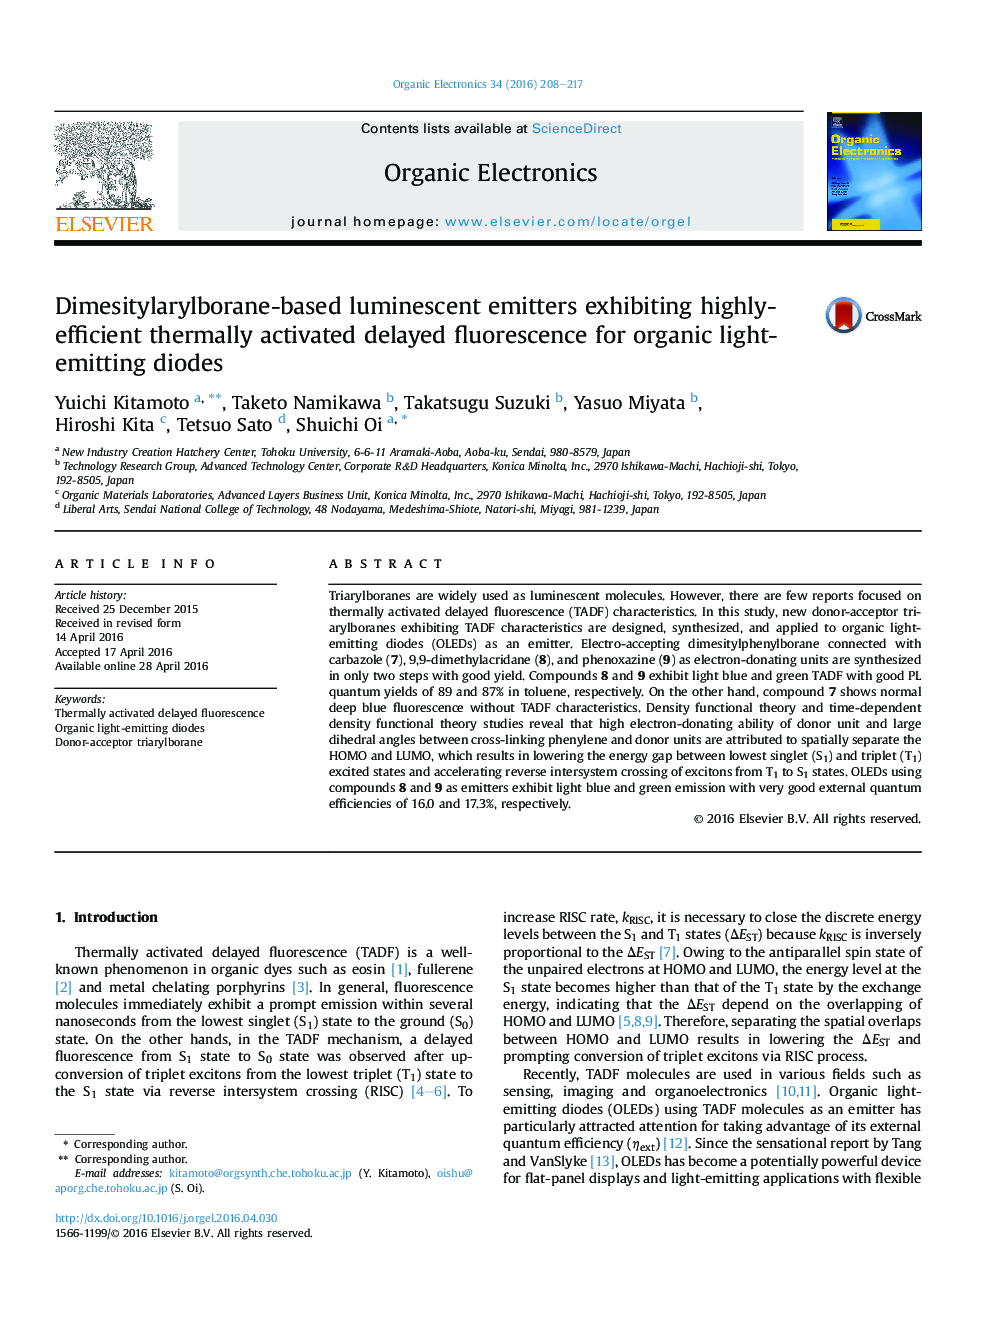 Dimesitylarylborane-based luminescent emitters exhibiting highly-efficient thermally activated delayed fluorescence for organic light-emitting diodes